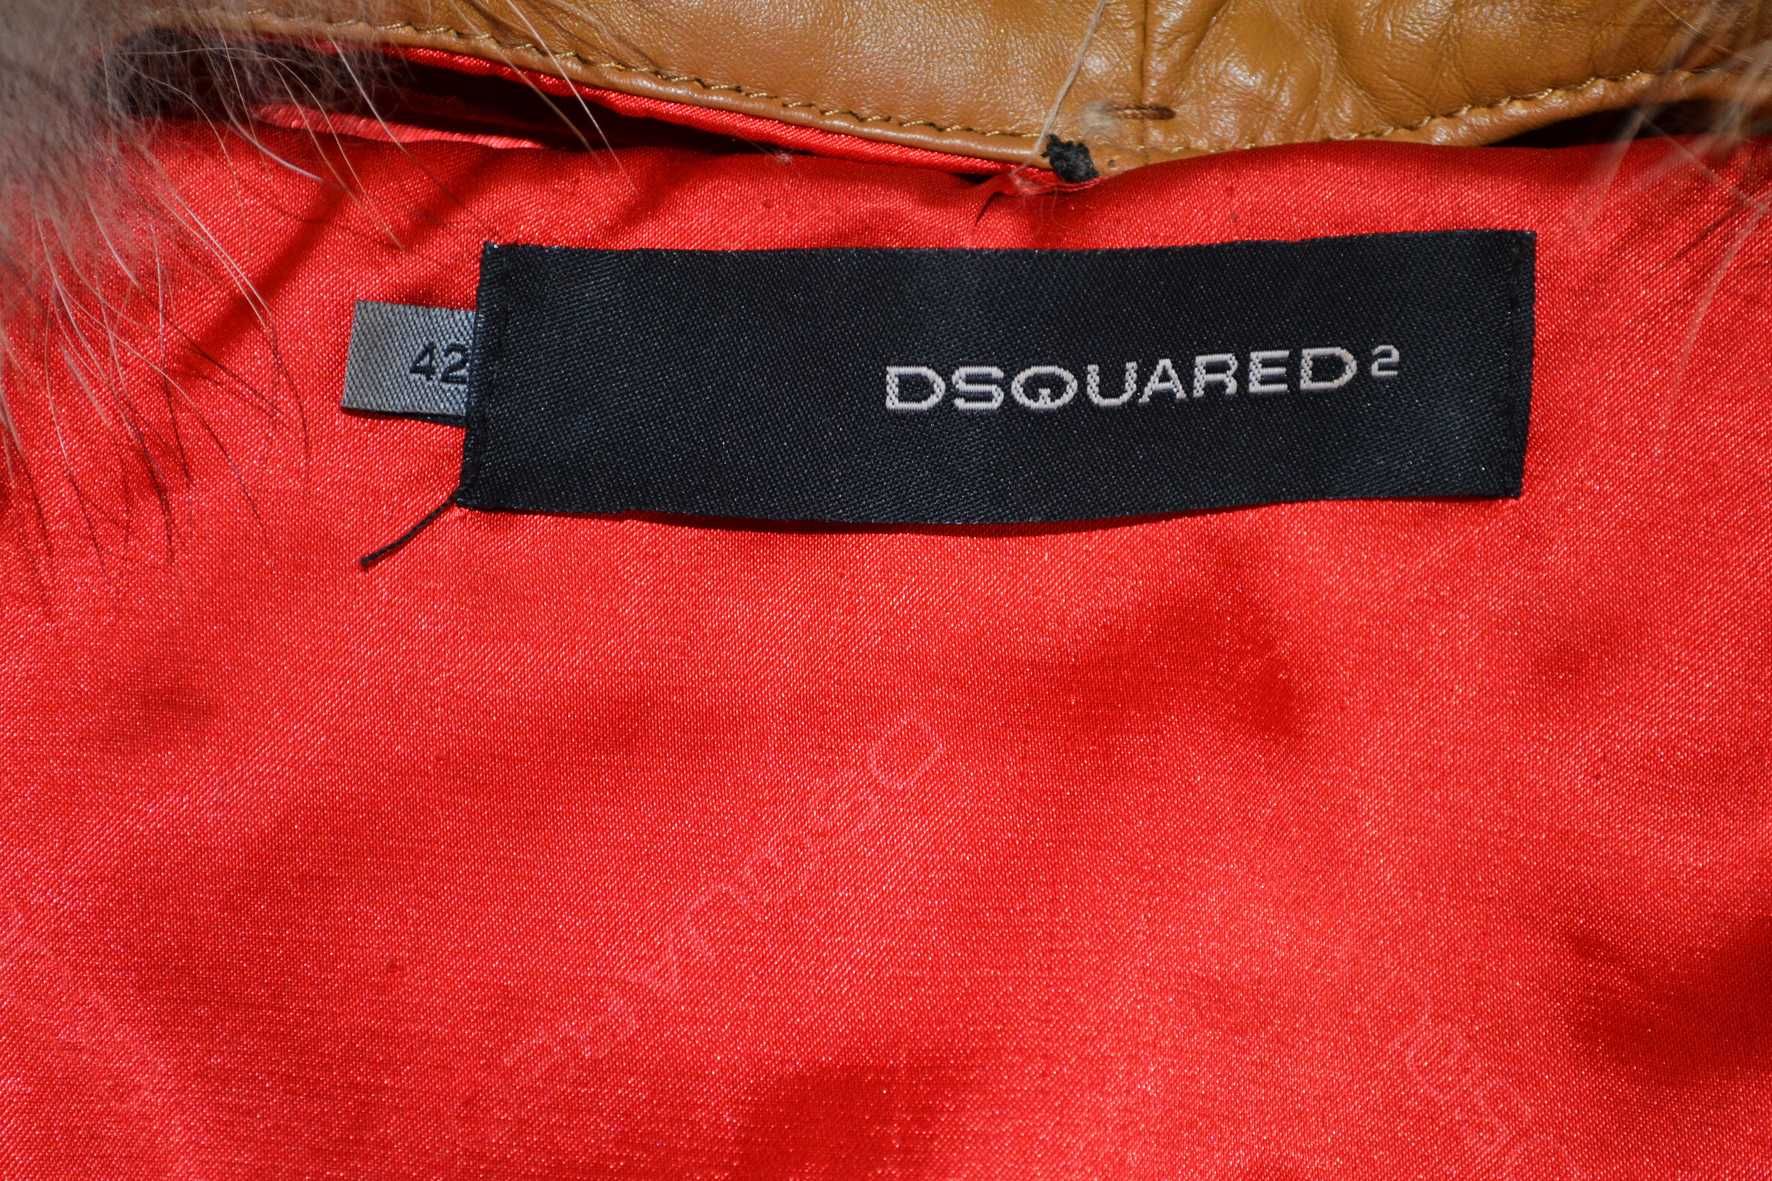 Бежевая, рыжая кожаная куртка Dsquared 2 бомпер косуха мех енот